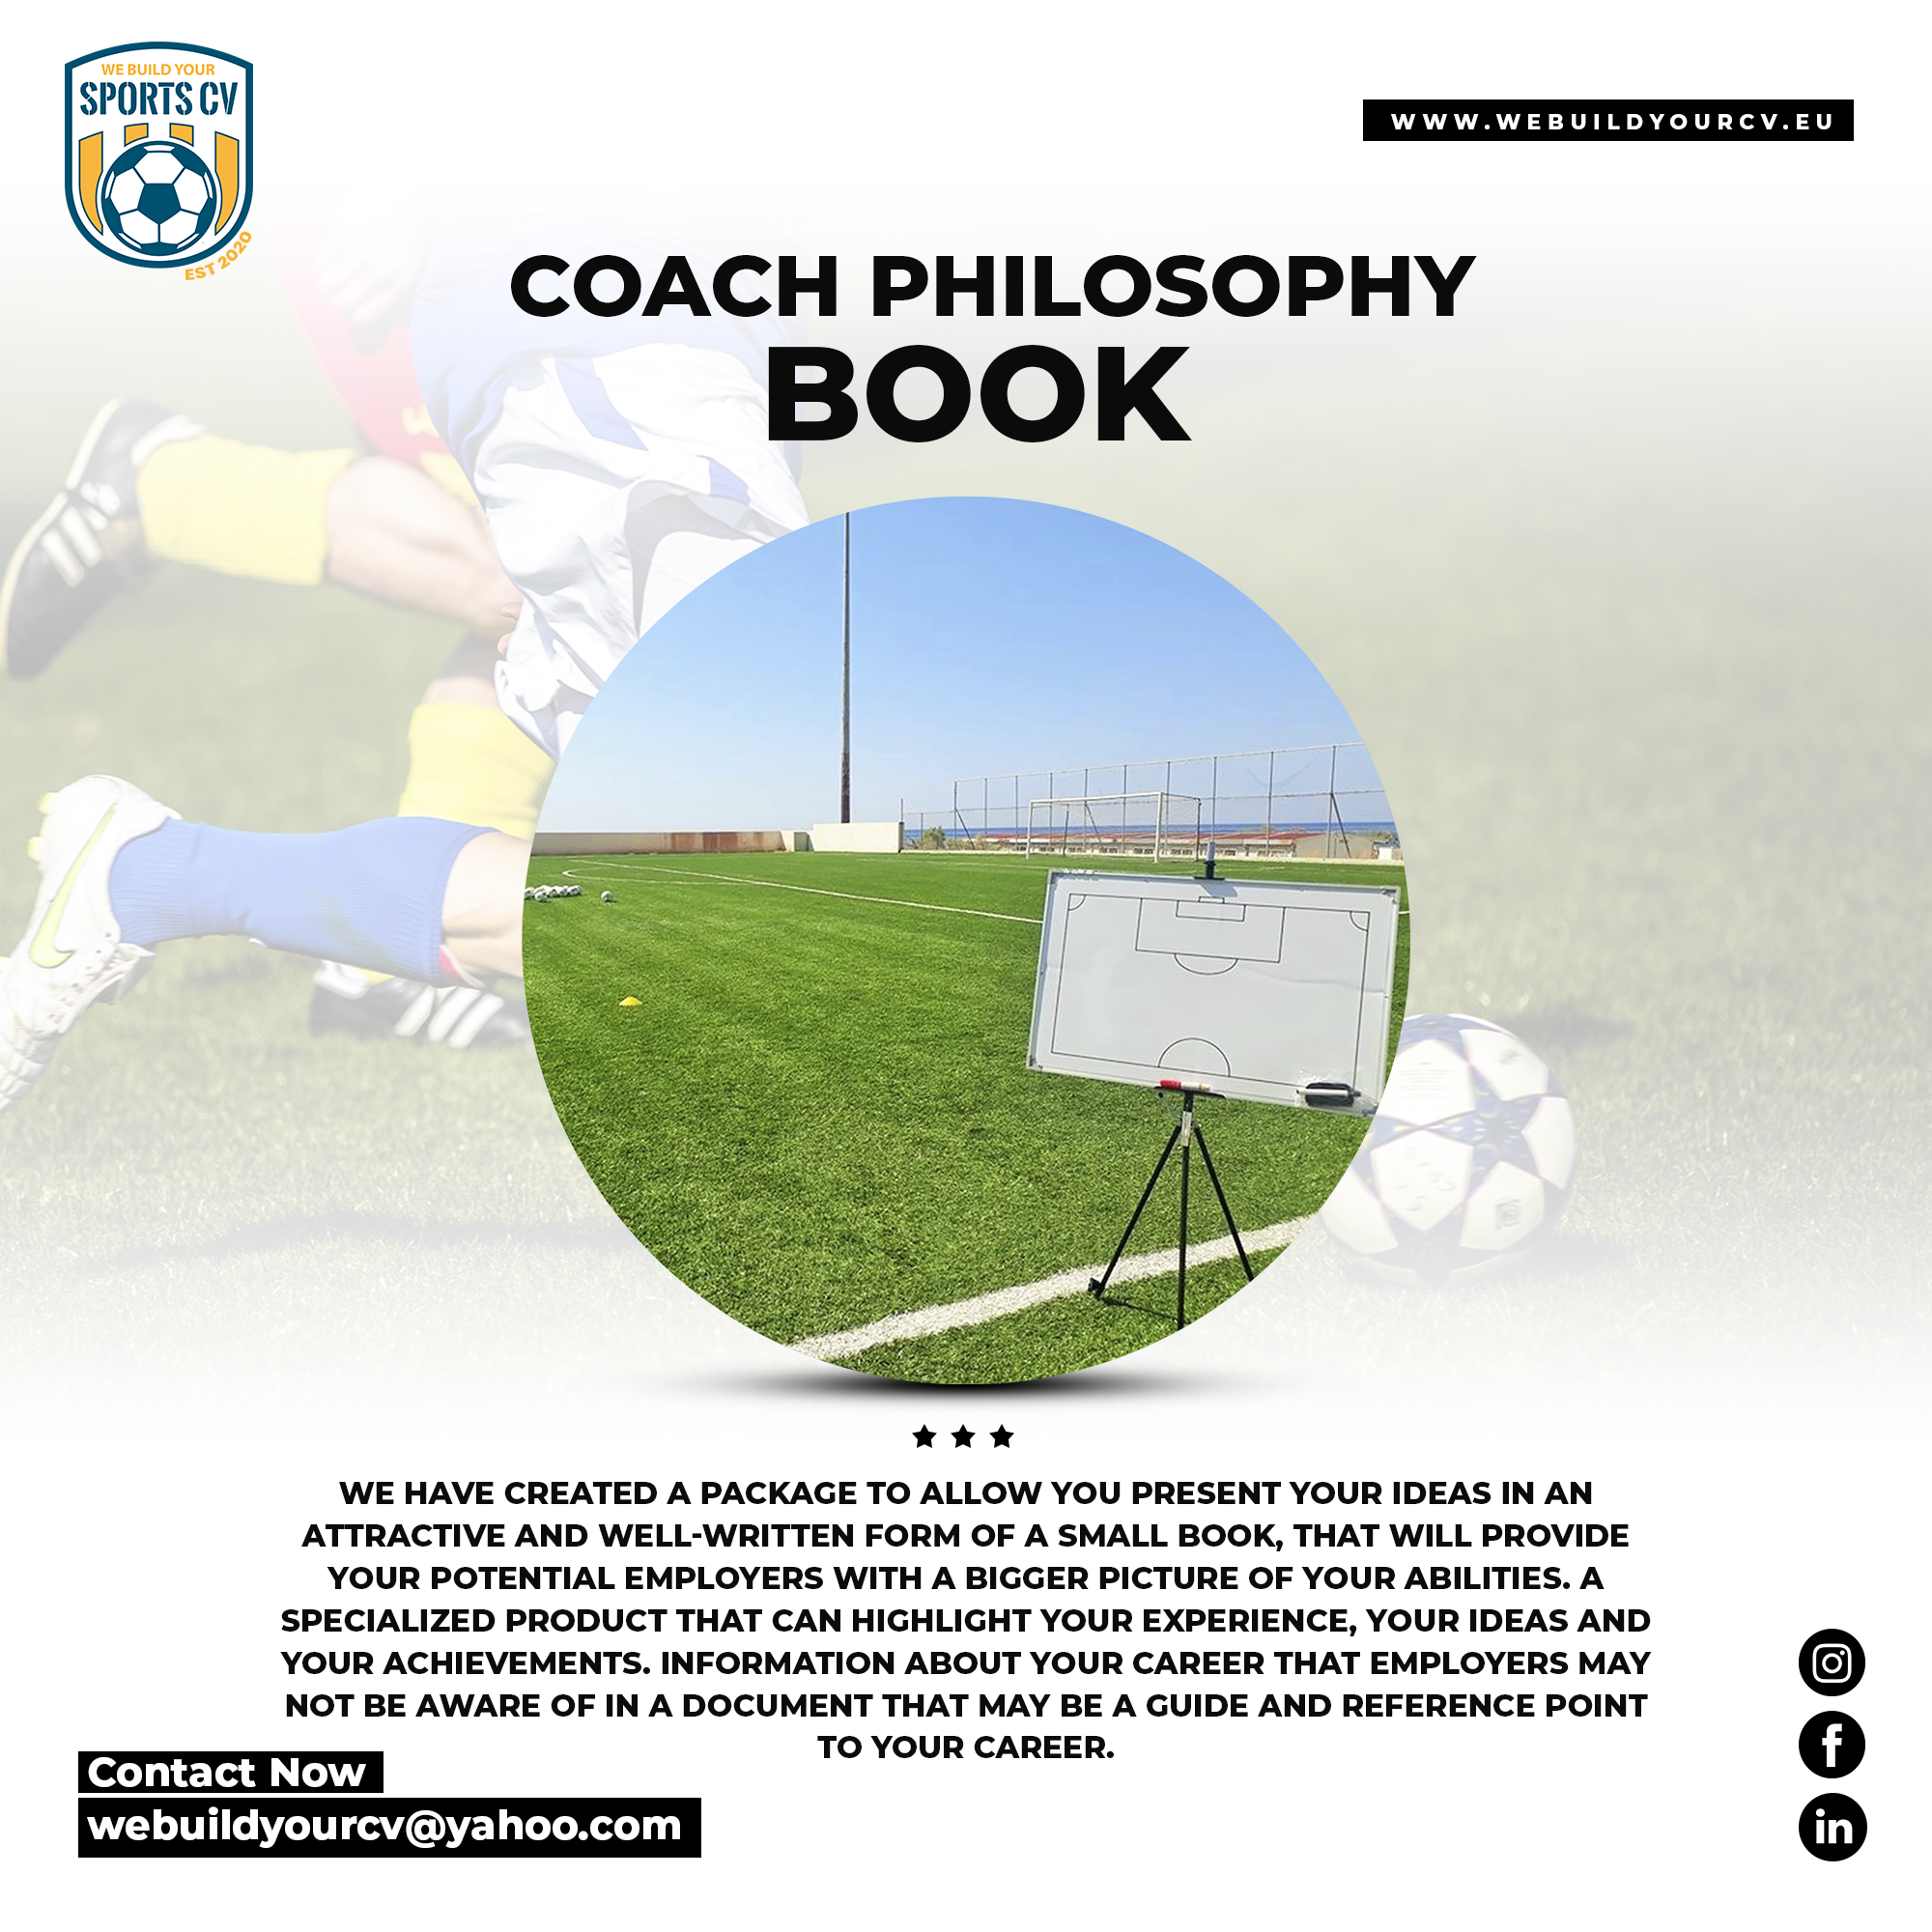 Coach philosophy book